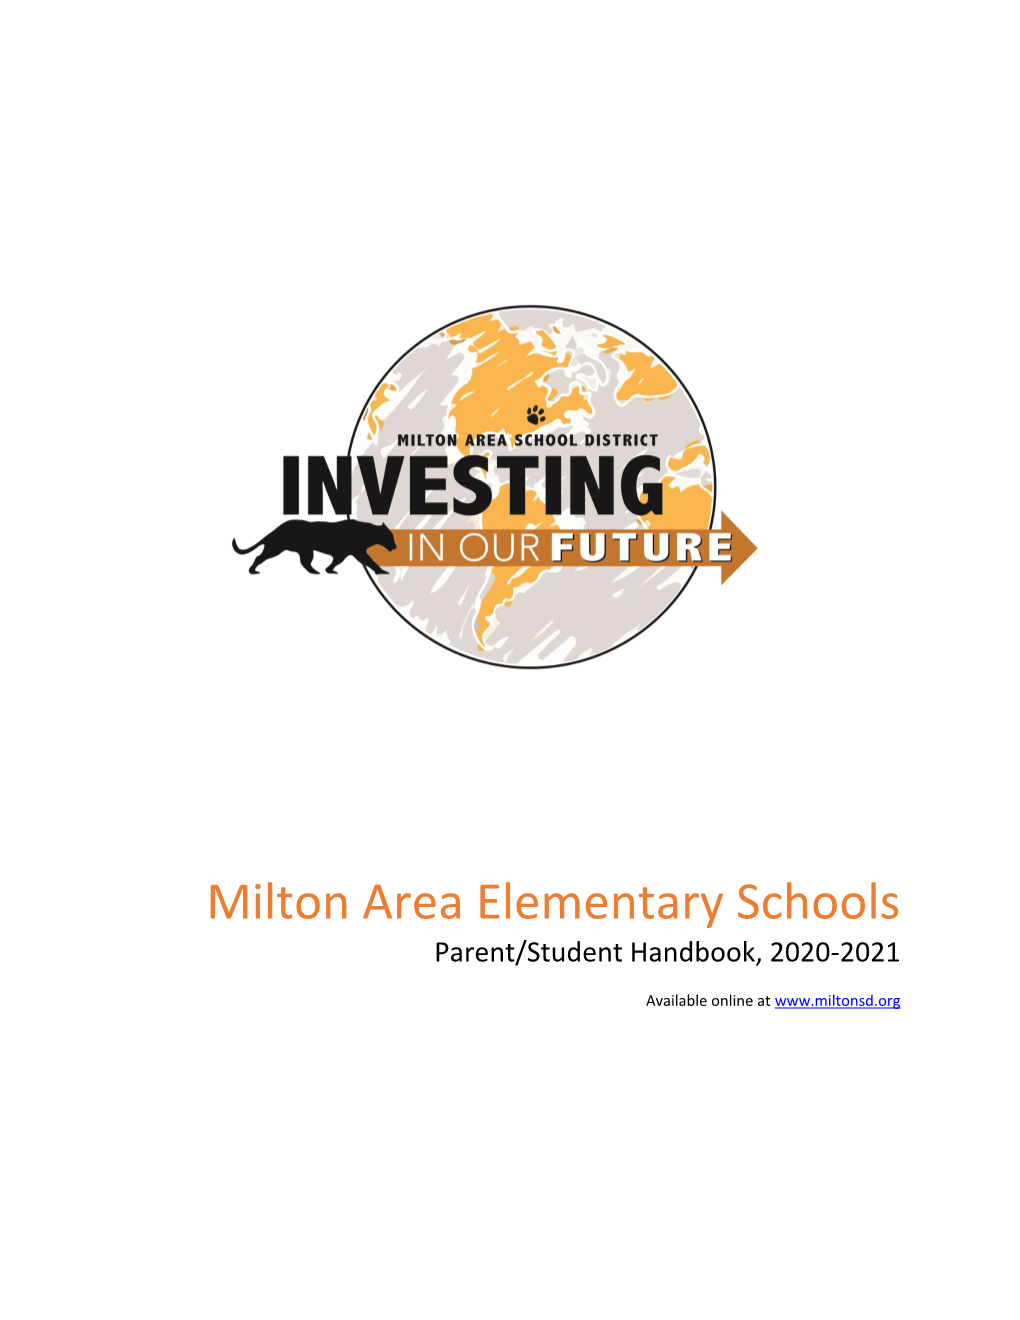 Milton Area Elementary Schools Parent/Student Handbook, 2020-2021